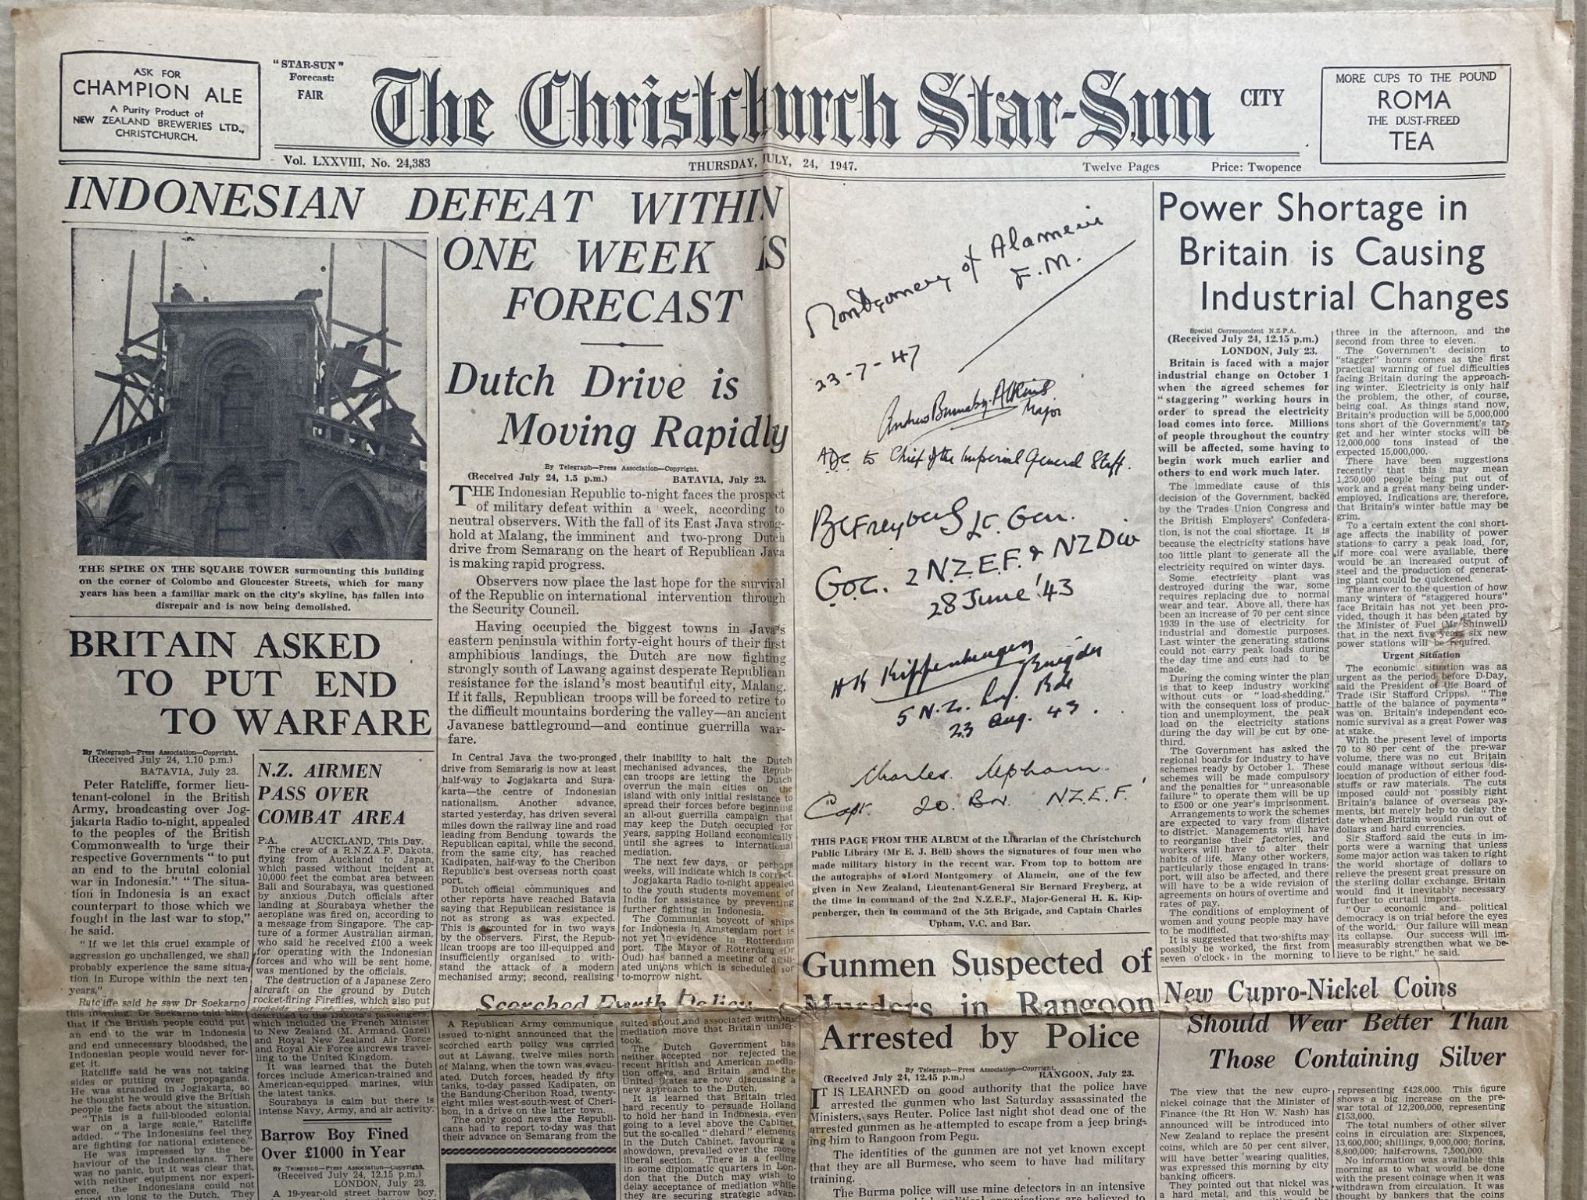 OLD NEWSPAPER: The Christchurch Star-Sun, 24 July 1947